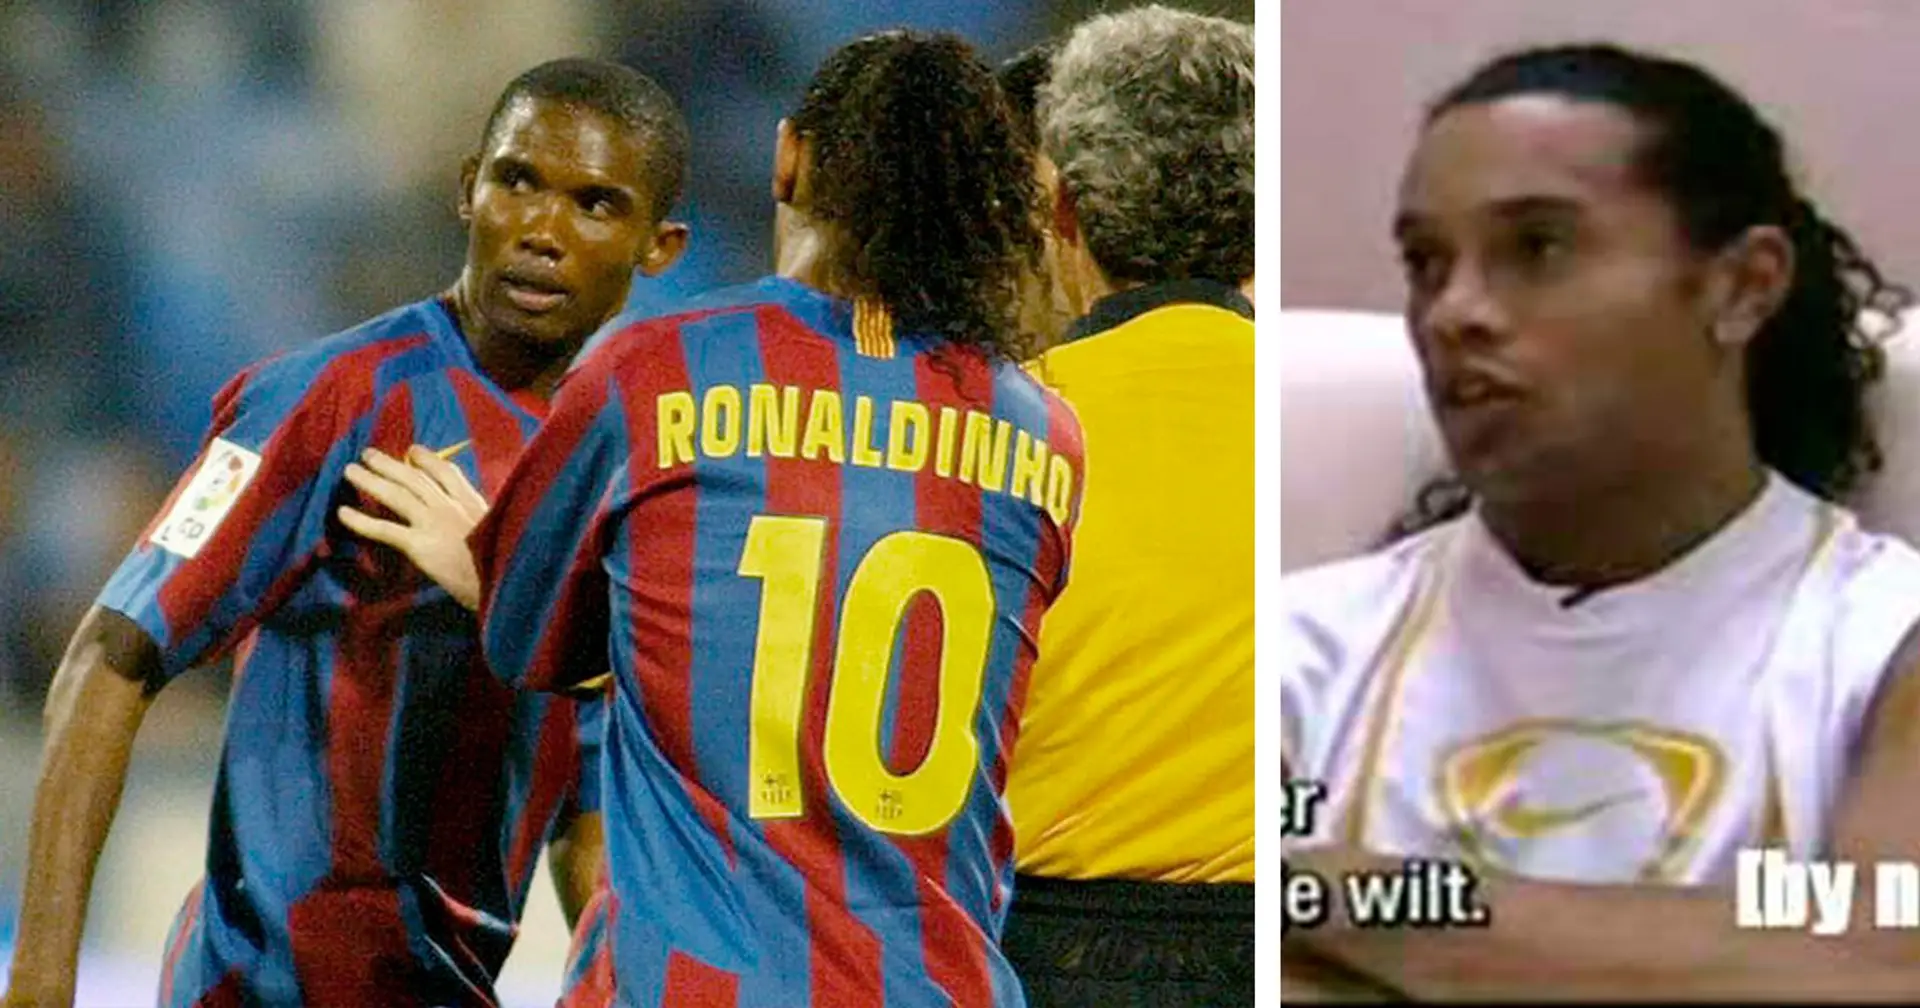 'If you go, I go with you': How Ronaldinho once persuaded Eto'o to play on despite racial abuse